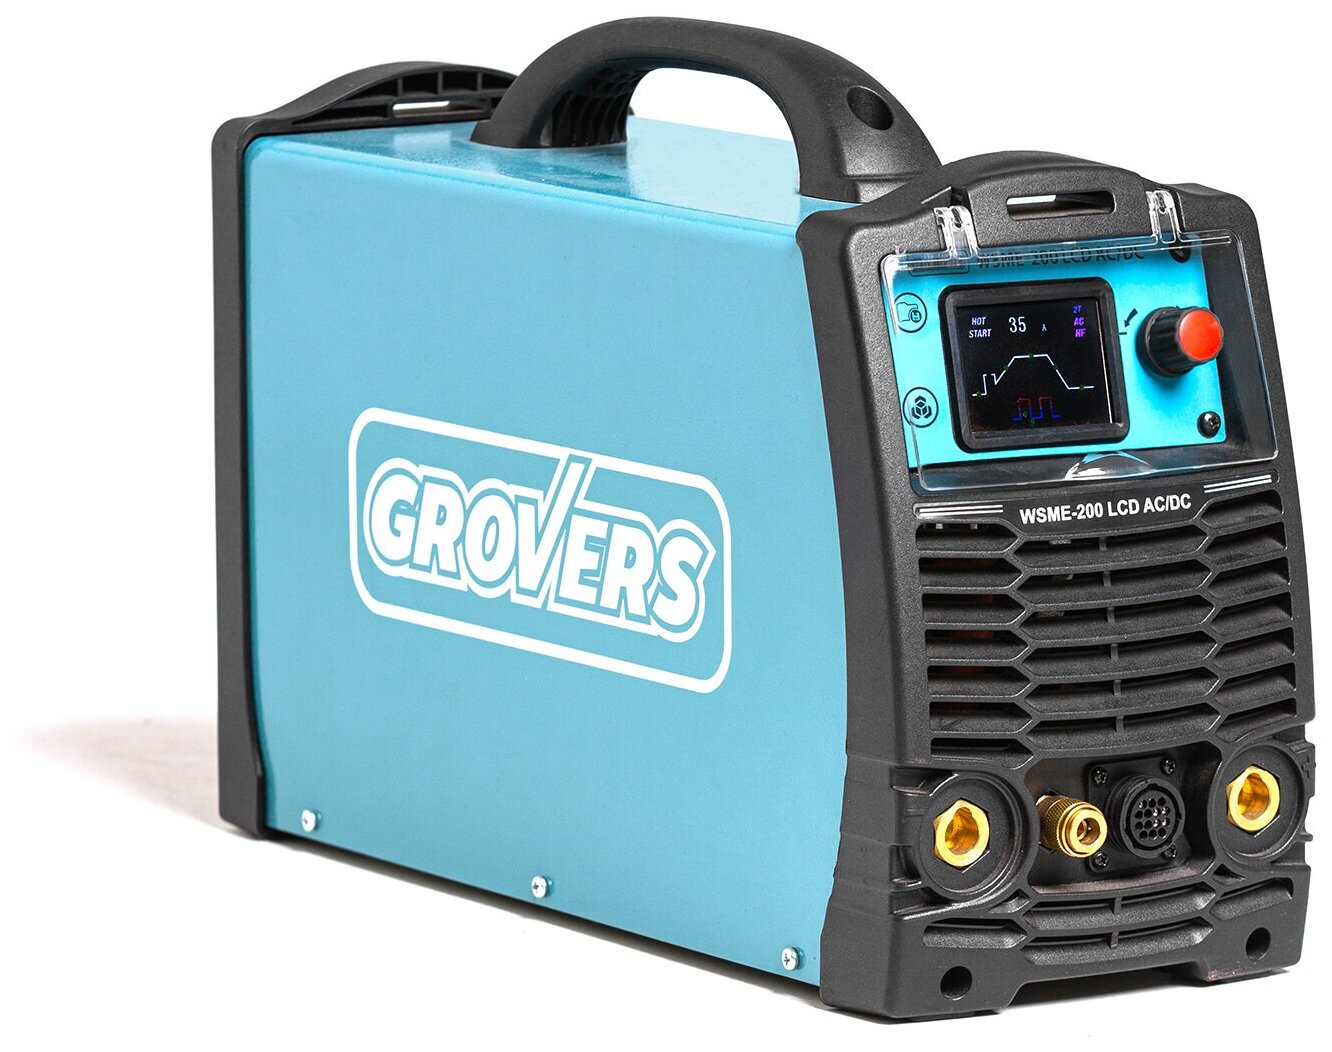 Grovers wsme-200 lcd ac/dc pulse